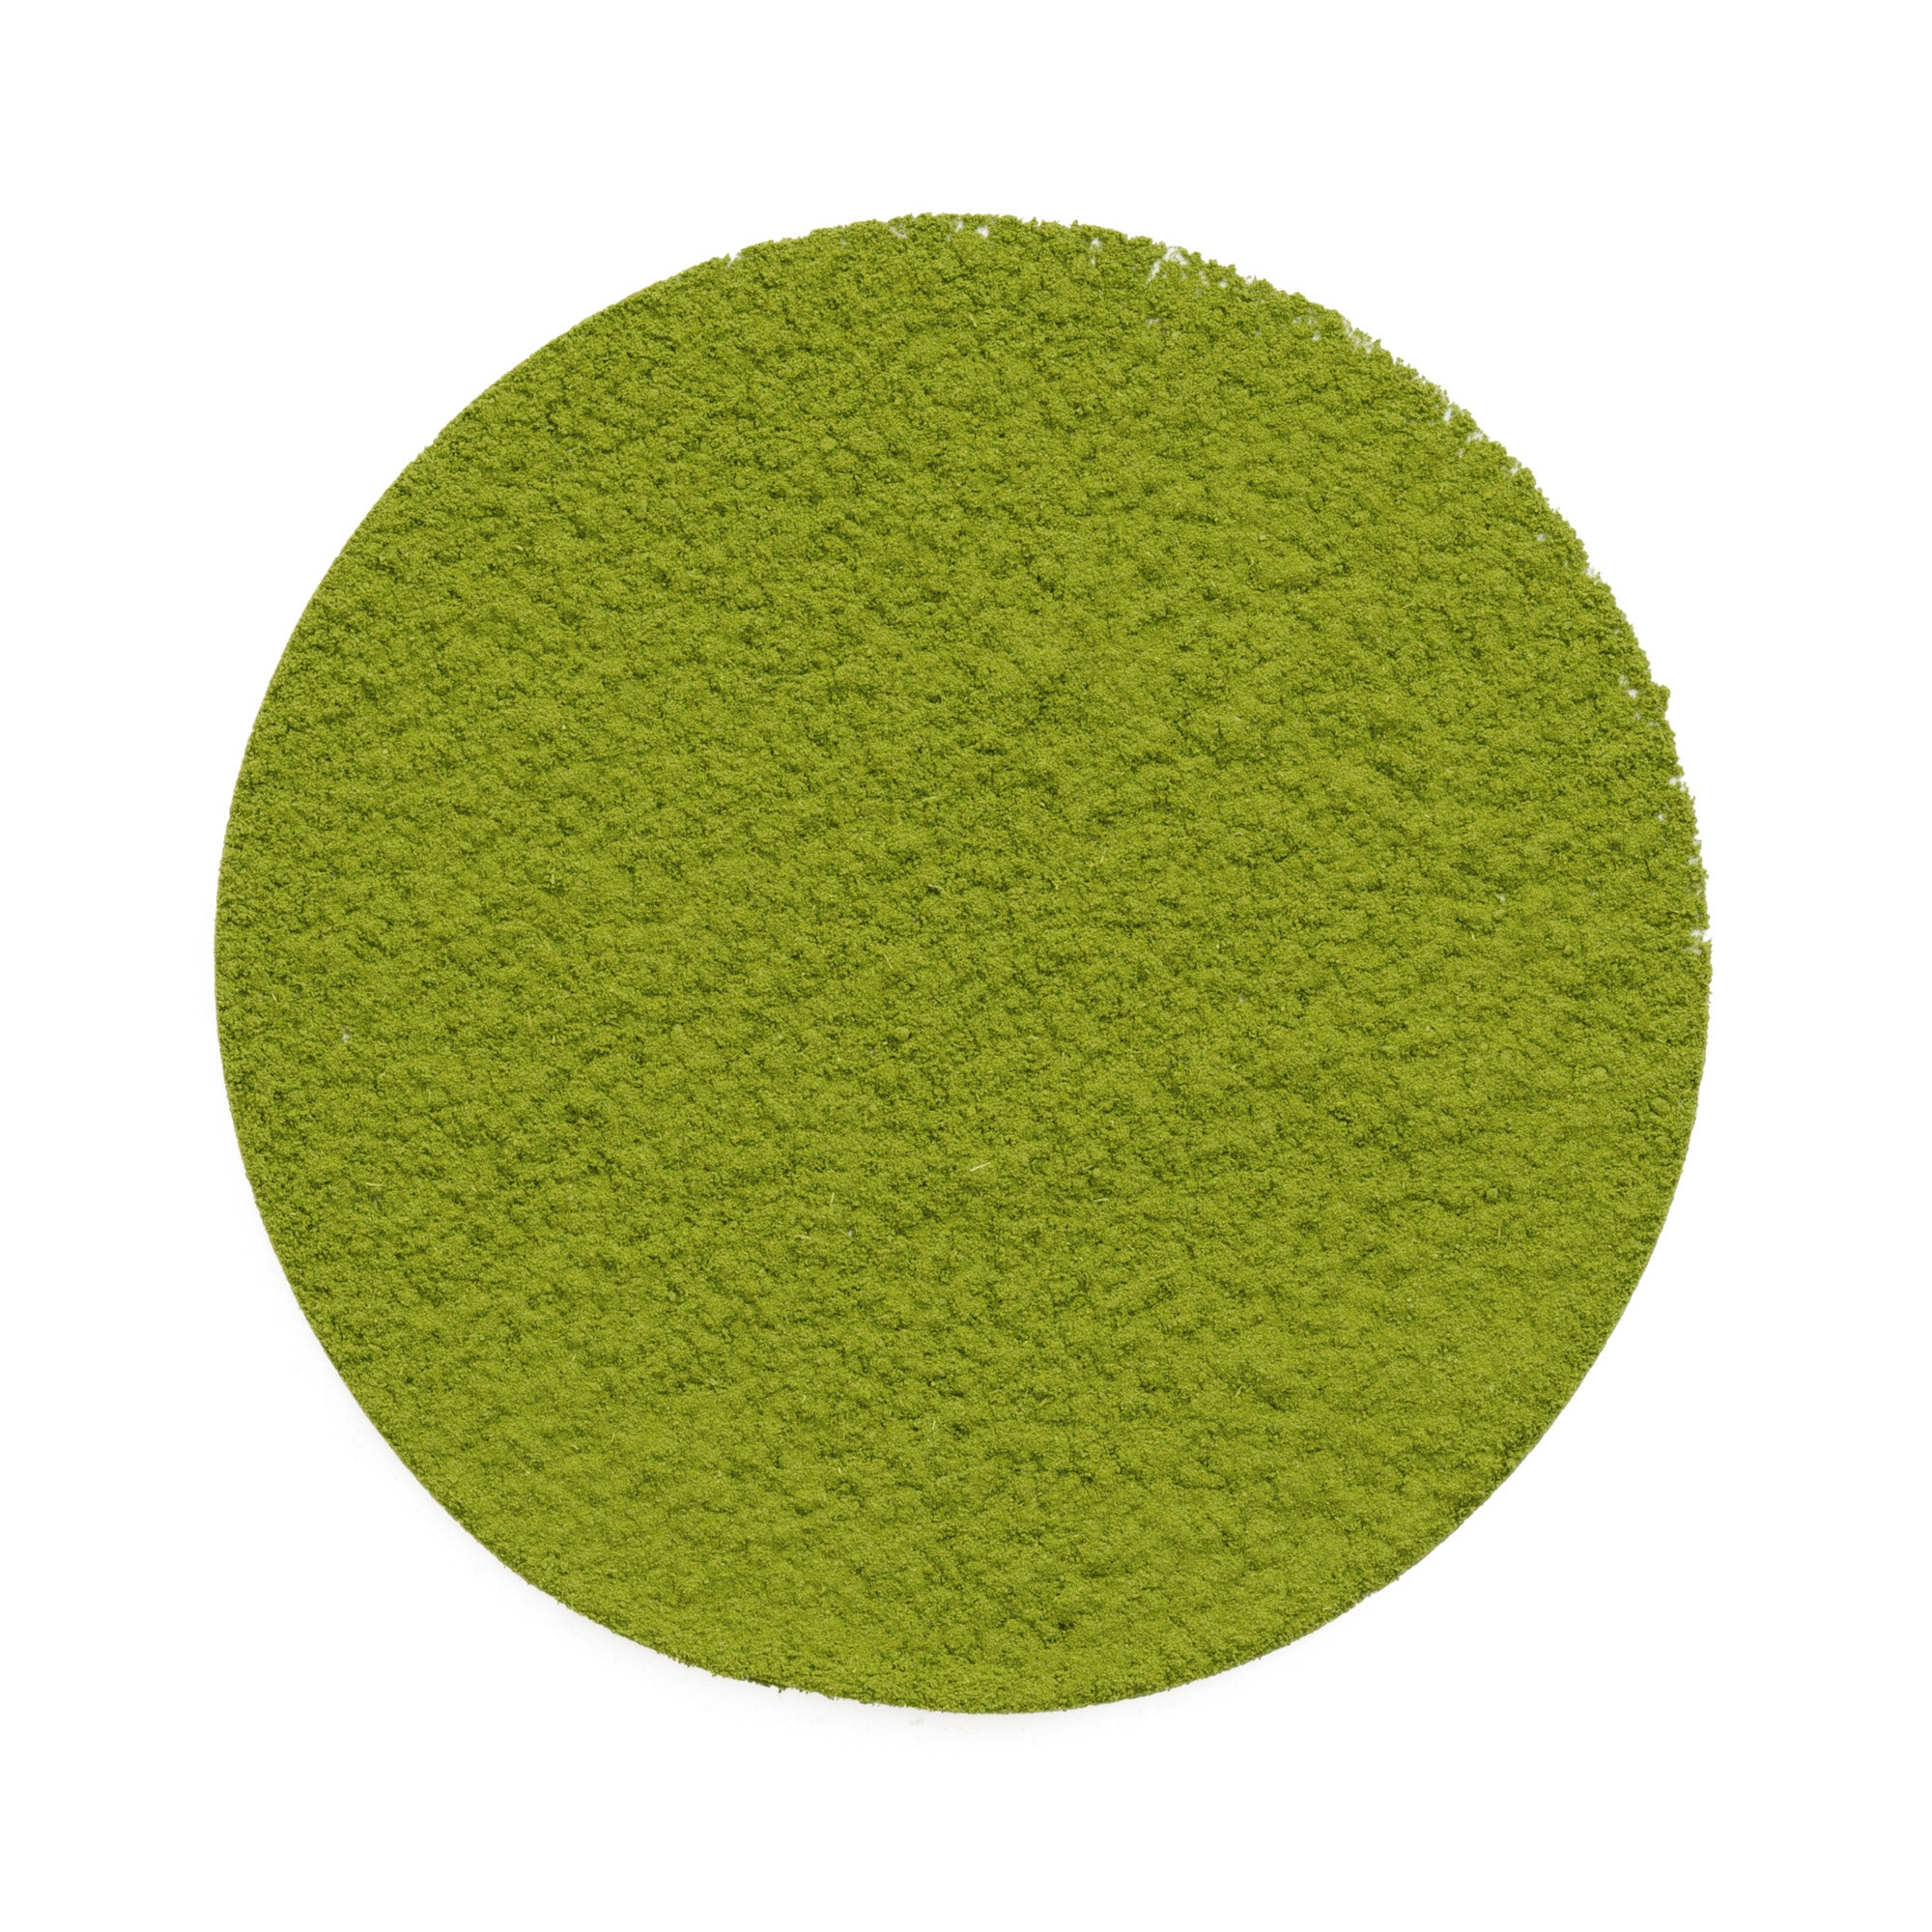 Organic Ceremonial Grade UJI Matcha Green Tea Powder, Antioxidant Rich, Premium Quality, Single Origin, Japanese, 1st Harvest | Heavenly Tea Leaves